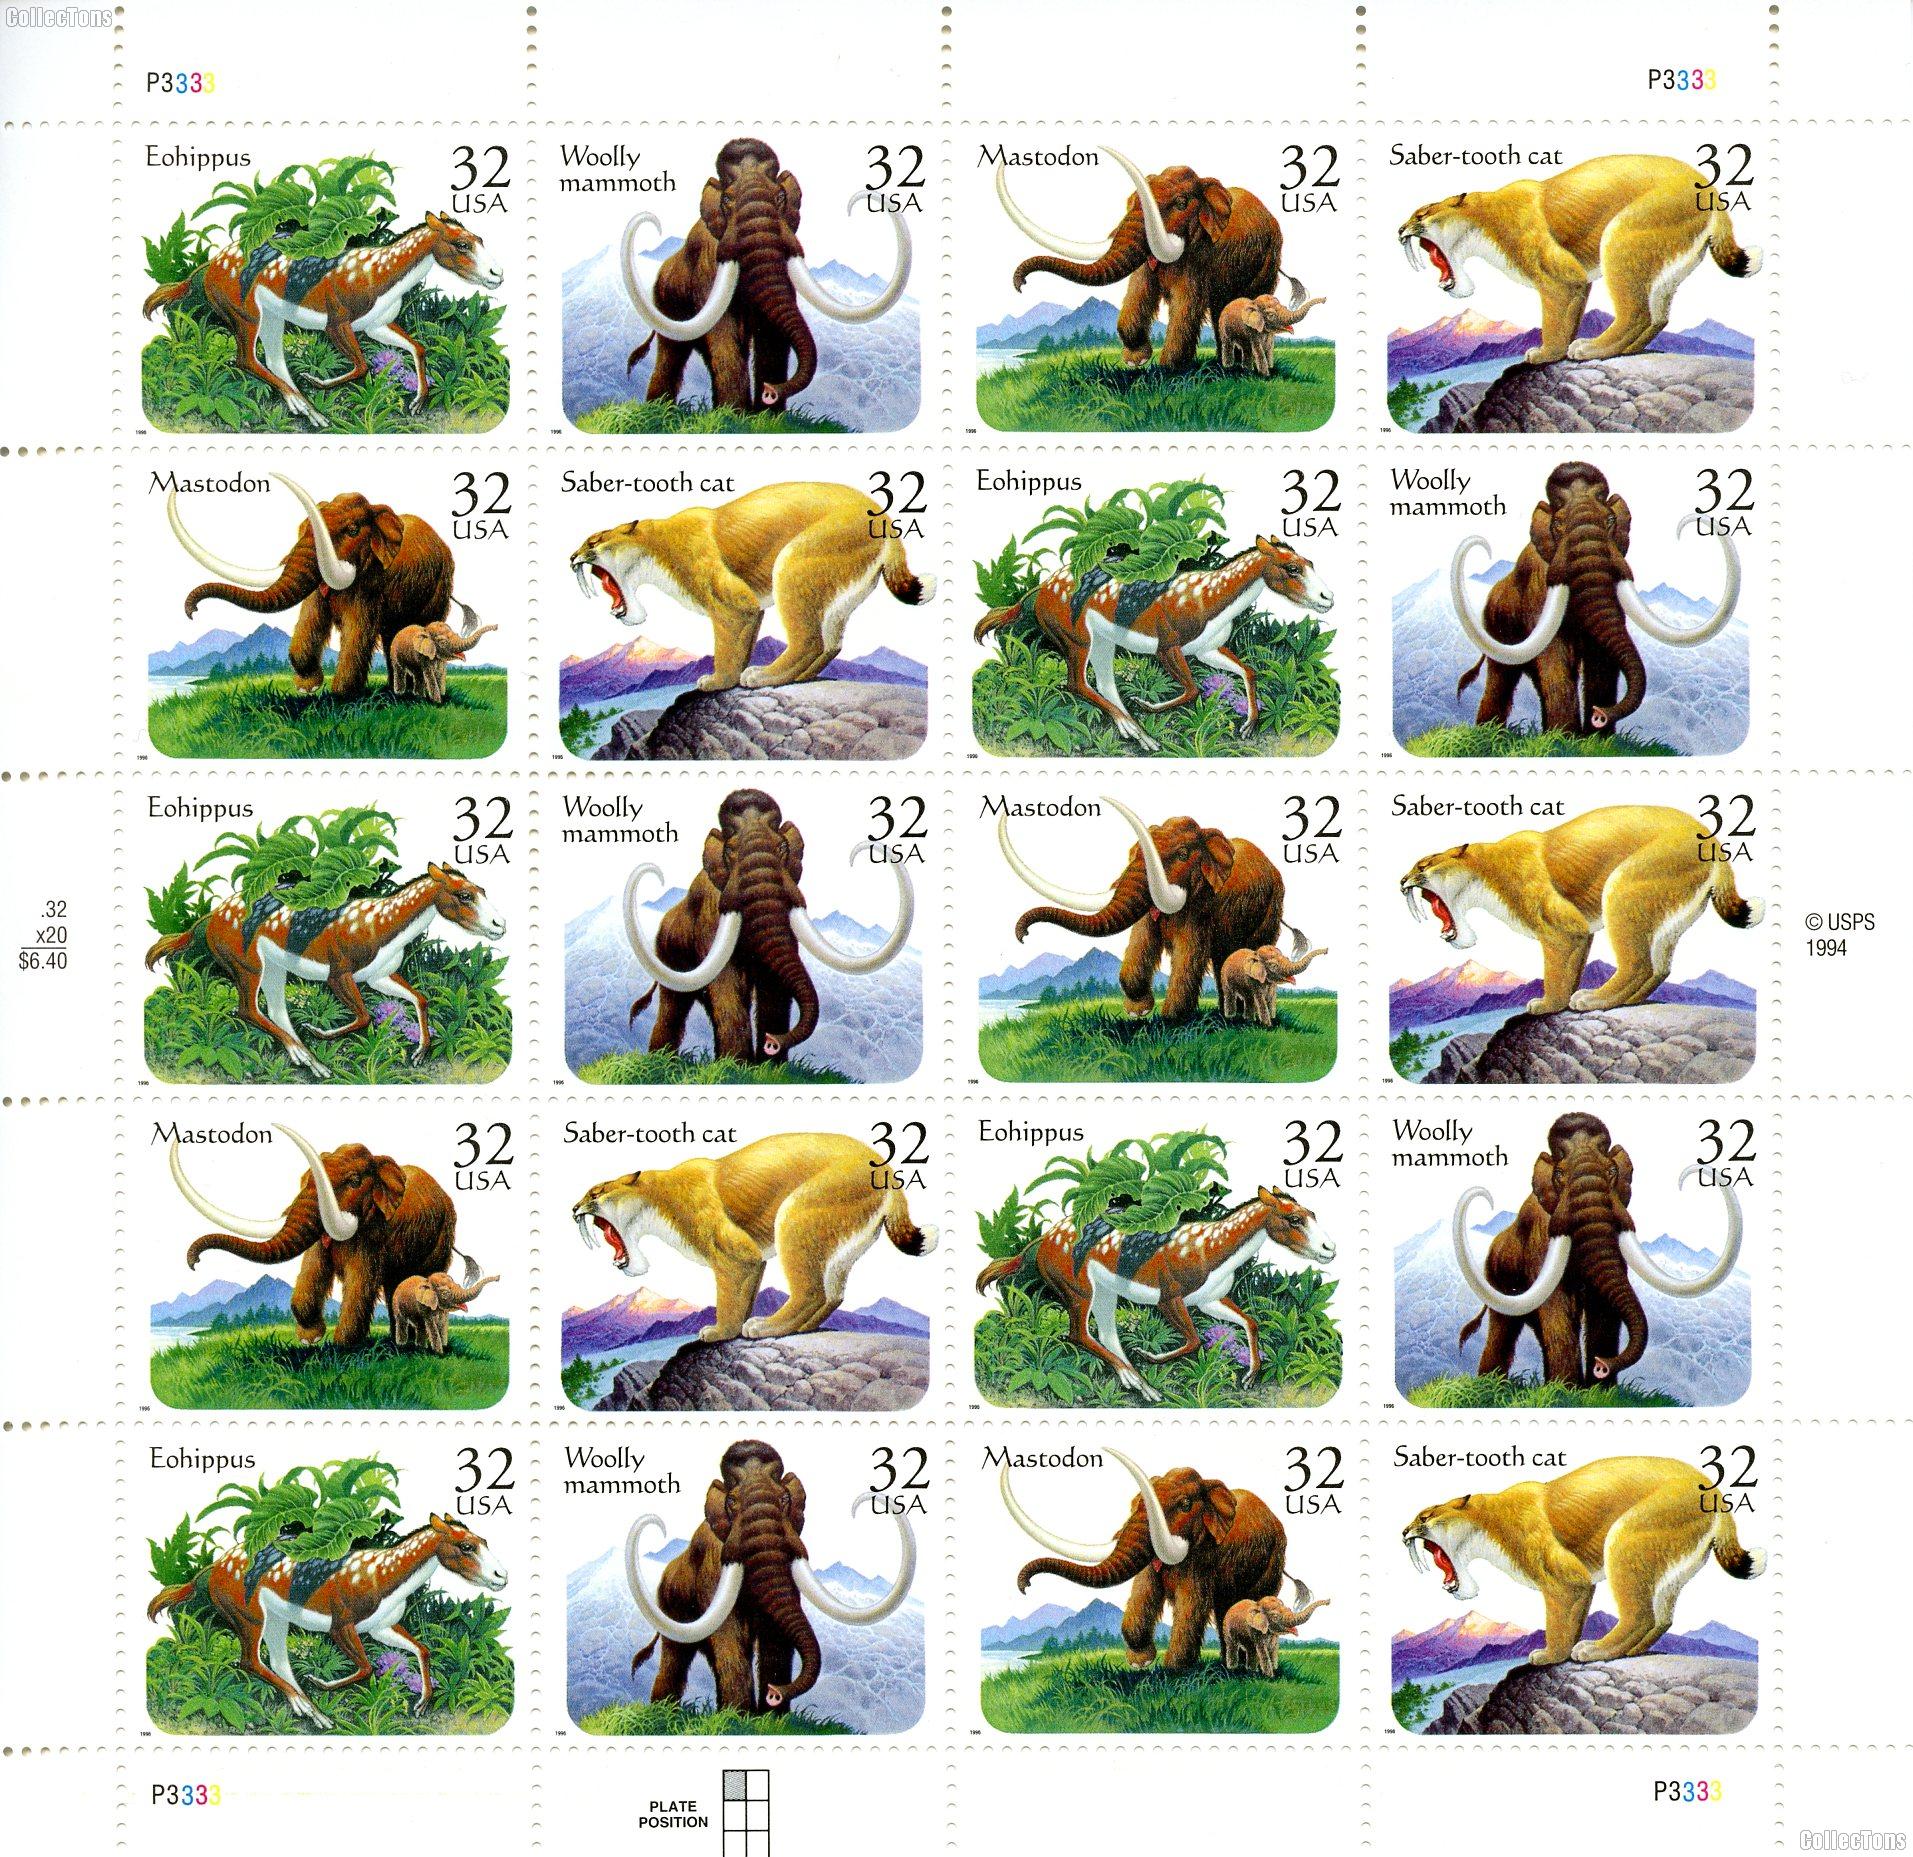 1996 Prehistoric Animals 32 Cent US Postage Stamp MNH Sheet of 20 Scott #3077-3080